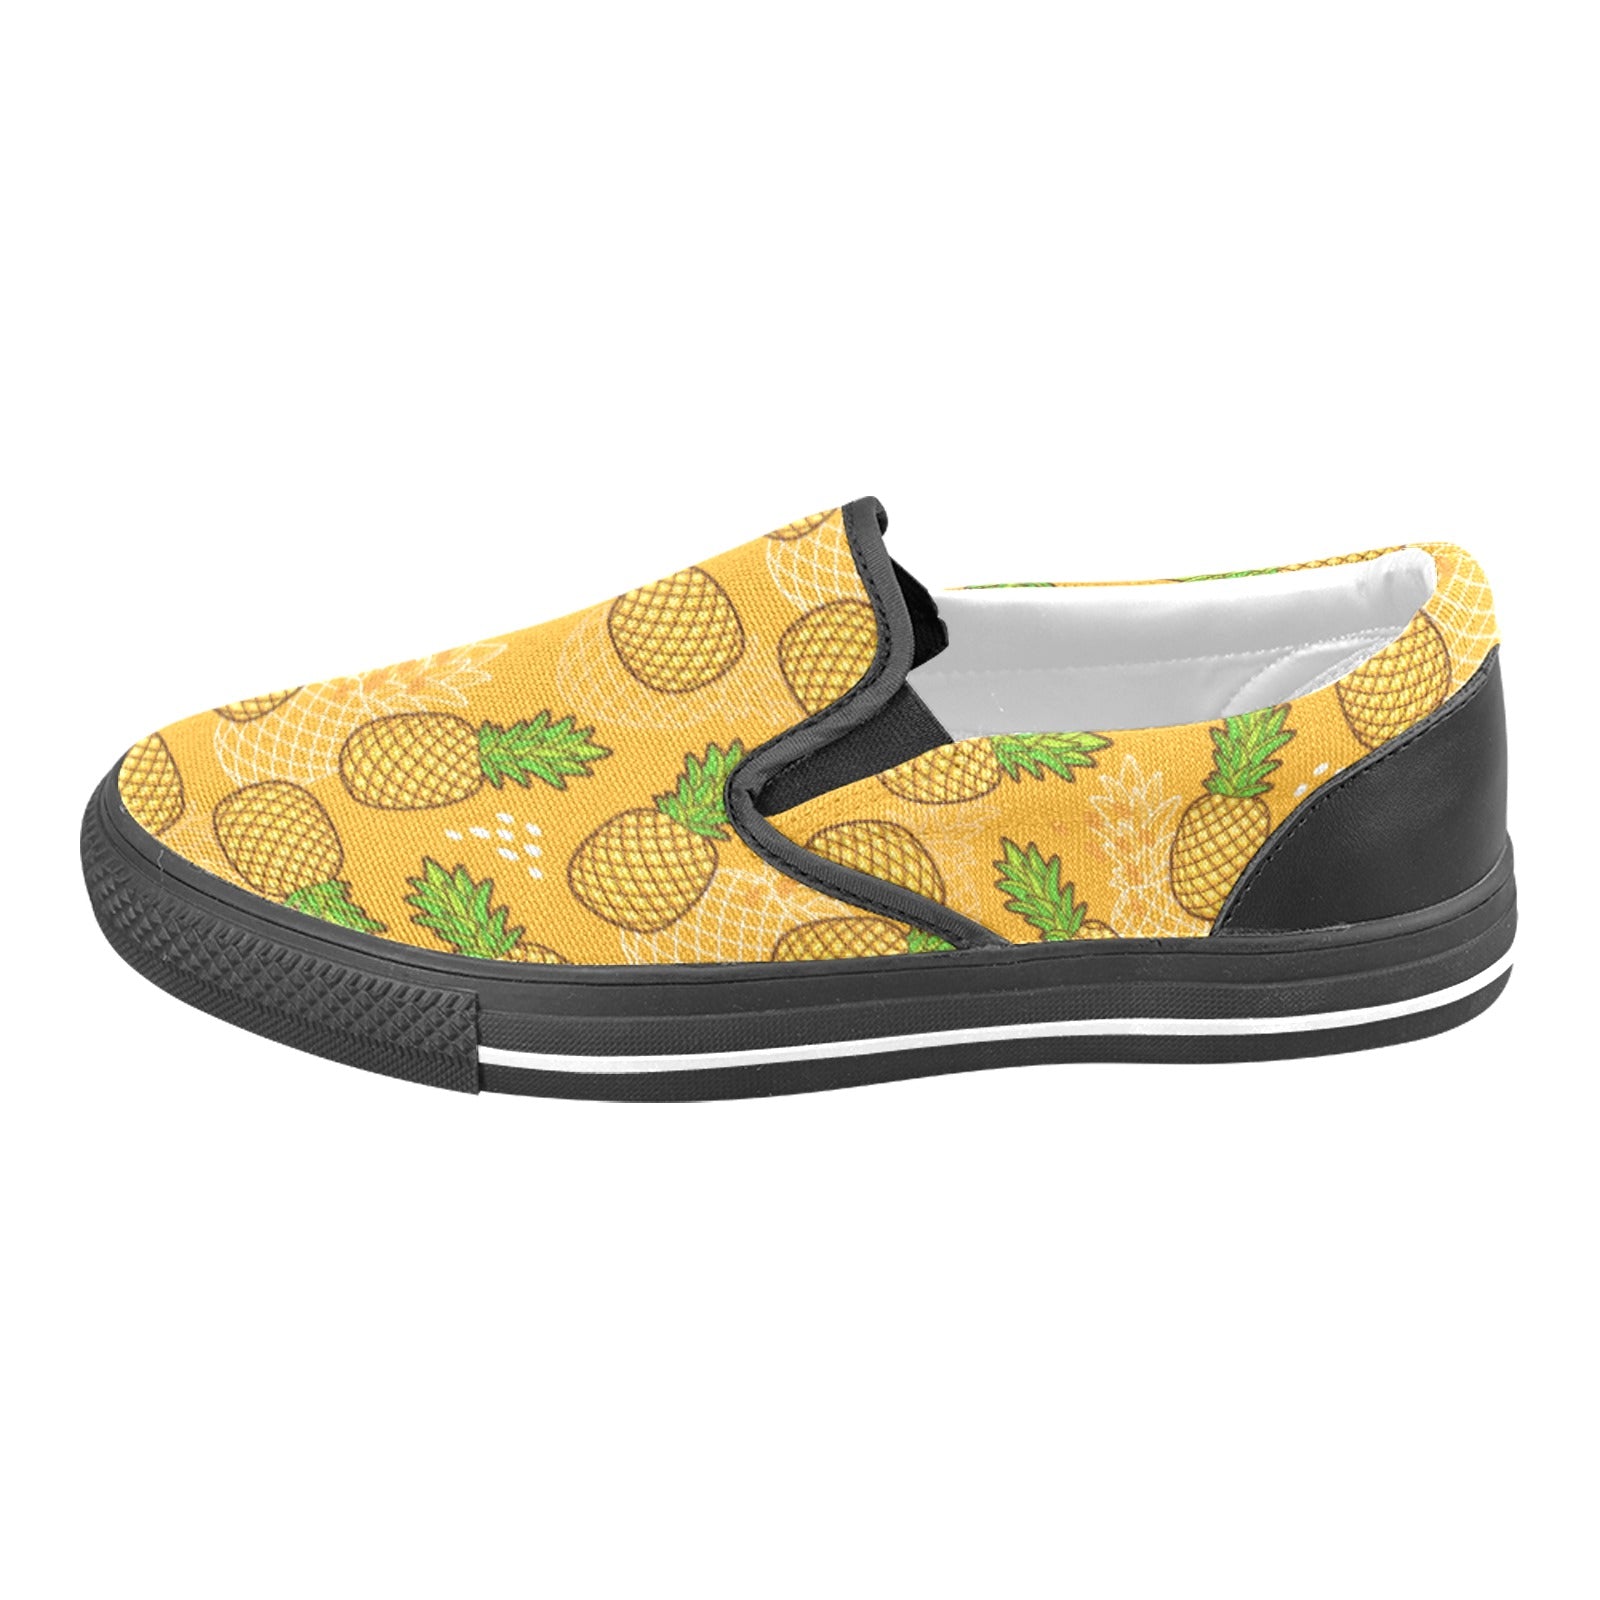 pineapple design Slip-on Canvas Shoes